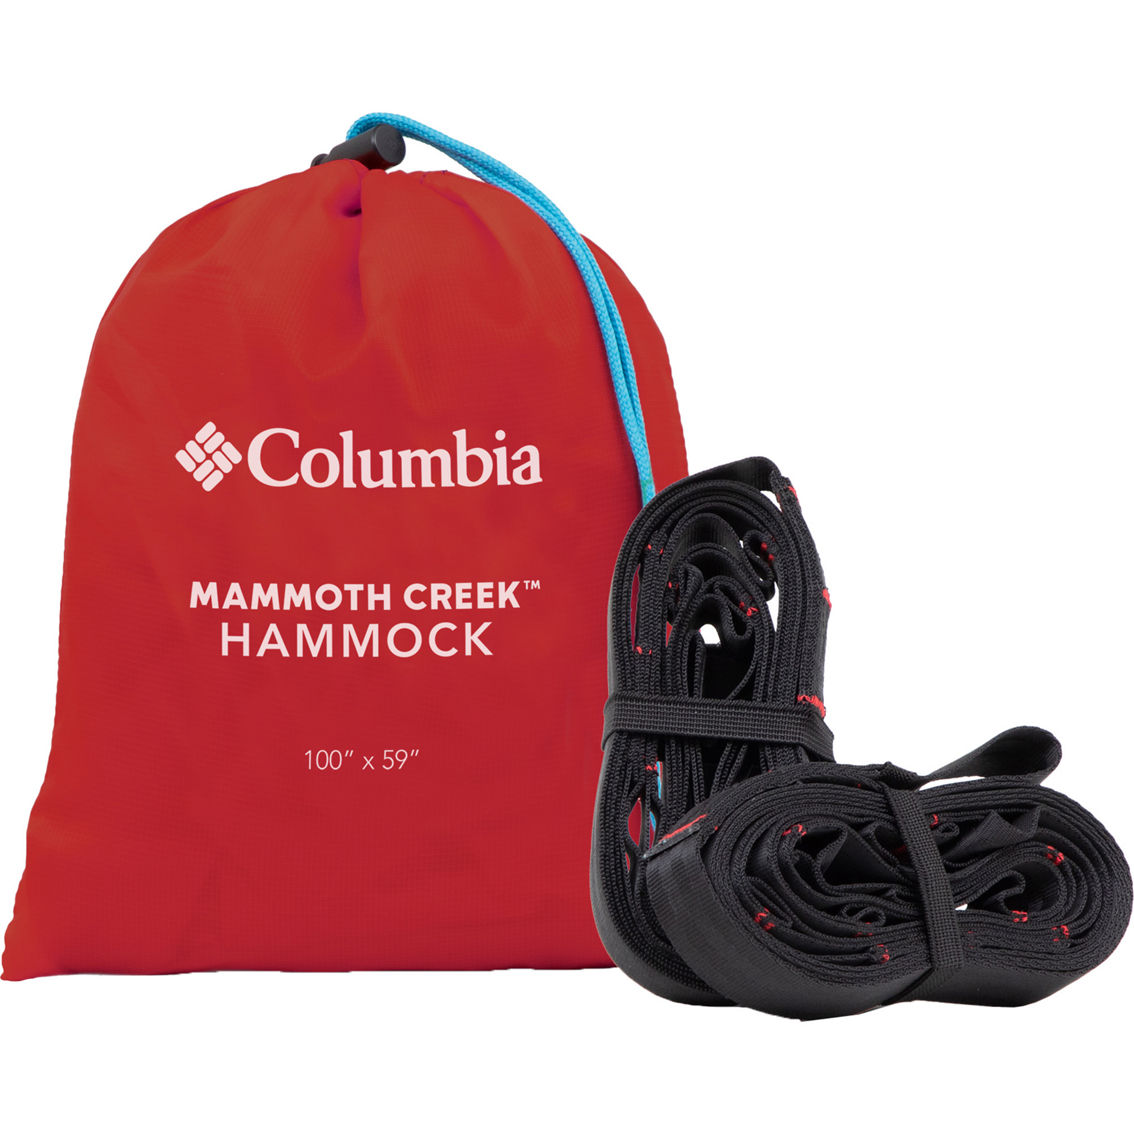 Columbia 1 Person Hammock - Image 2 of 2